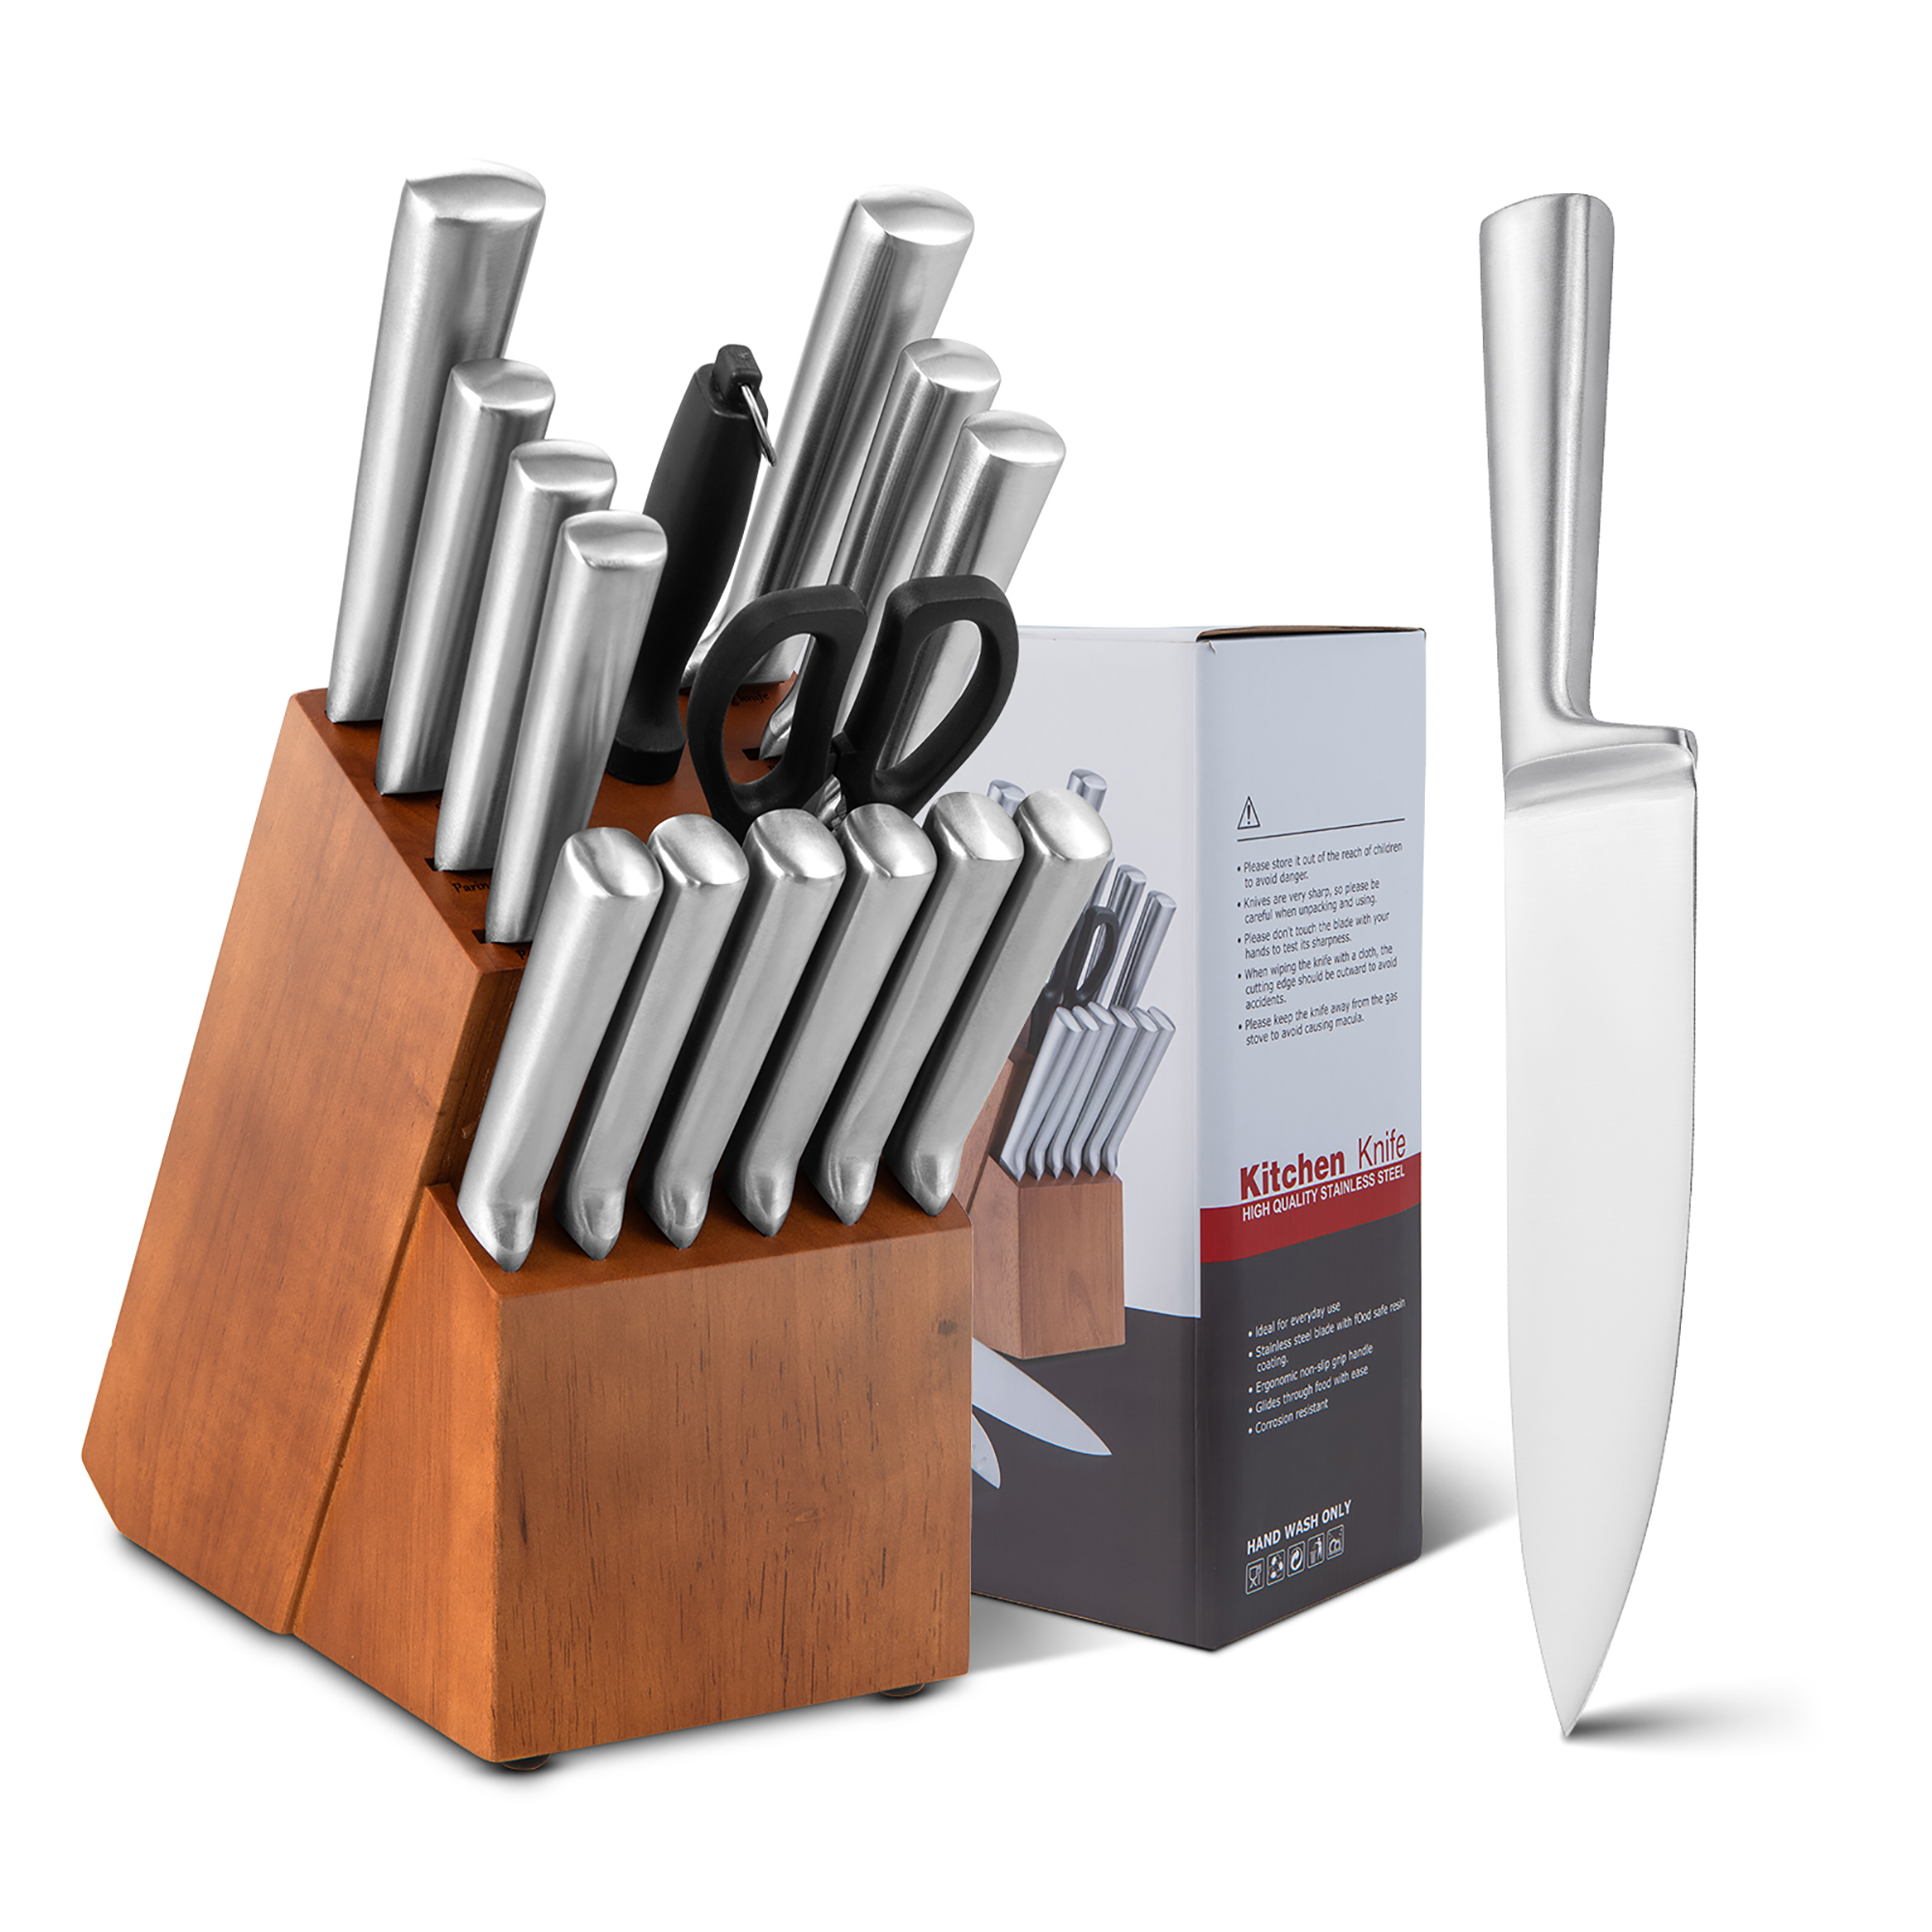 Costway 16-Piece Kitchen Knife Set Stainless Steel Knife Block Set w/ Sharpener